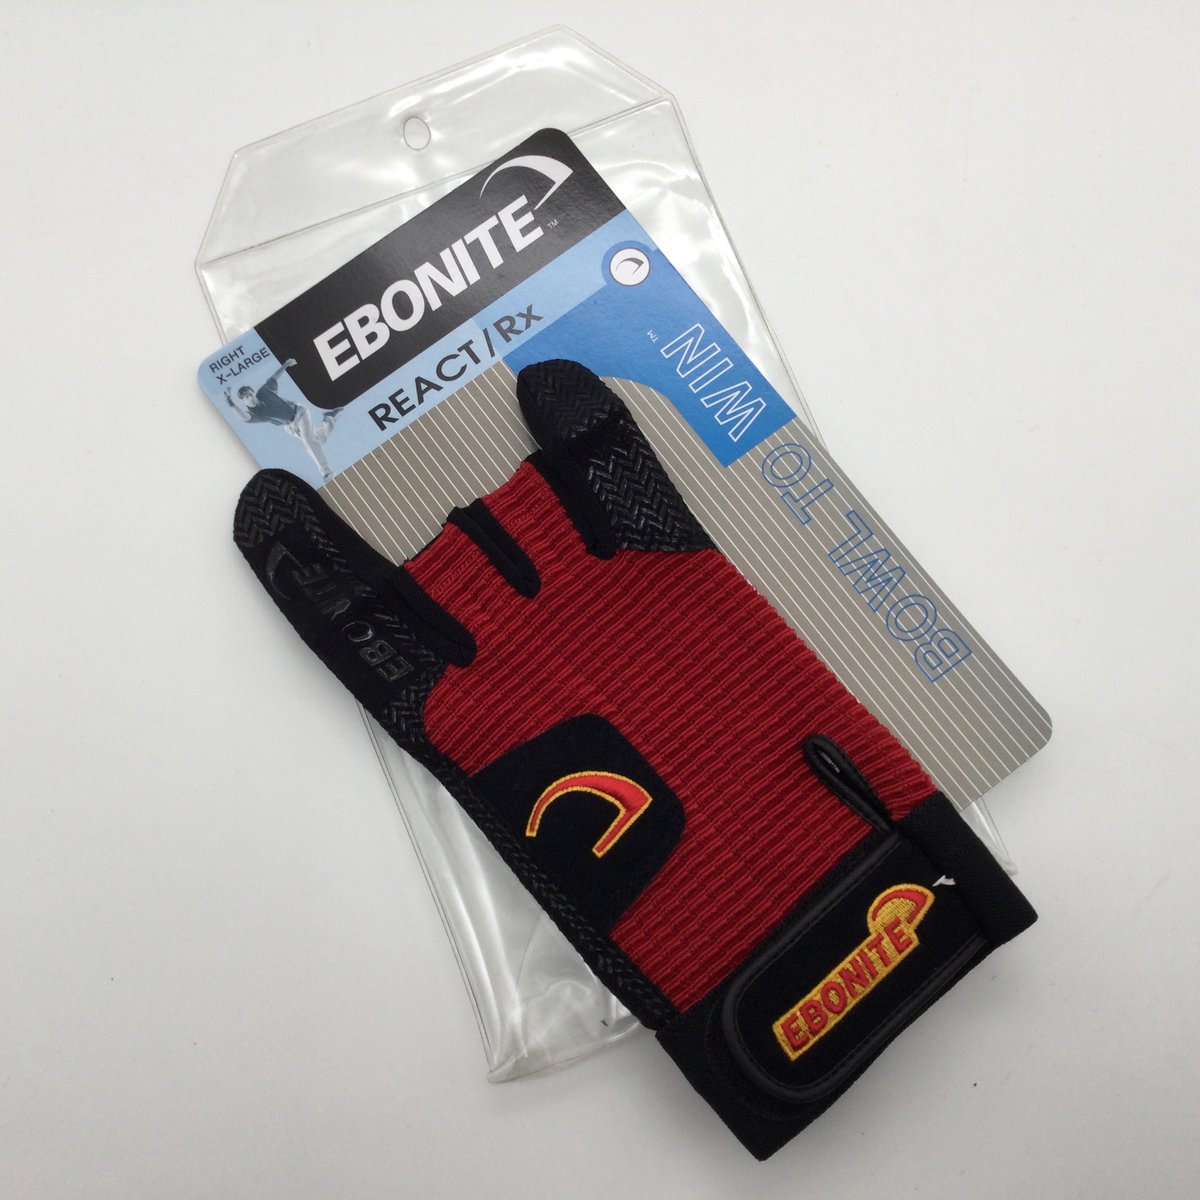 Bowling Bowling Glove 'Ebonite React/RX bowling handschoen ' extra large, rechts handig. zwart en rood